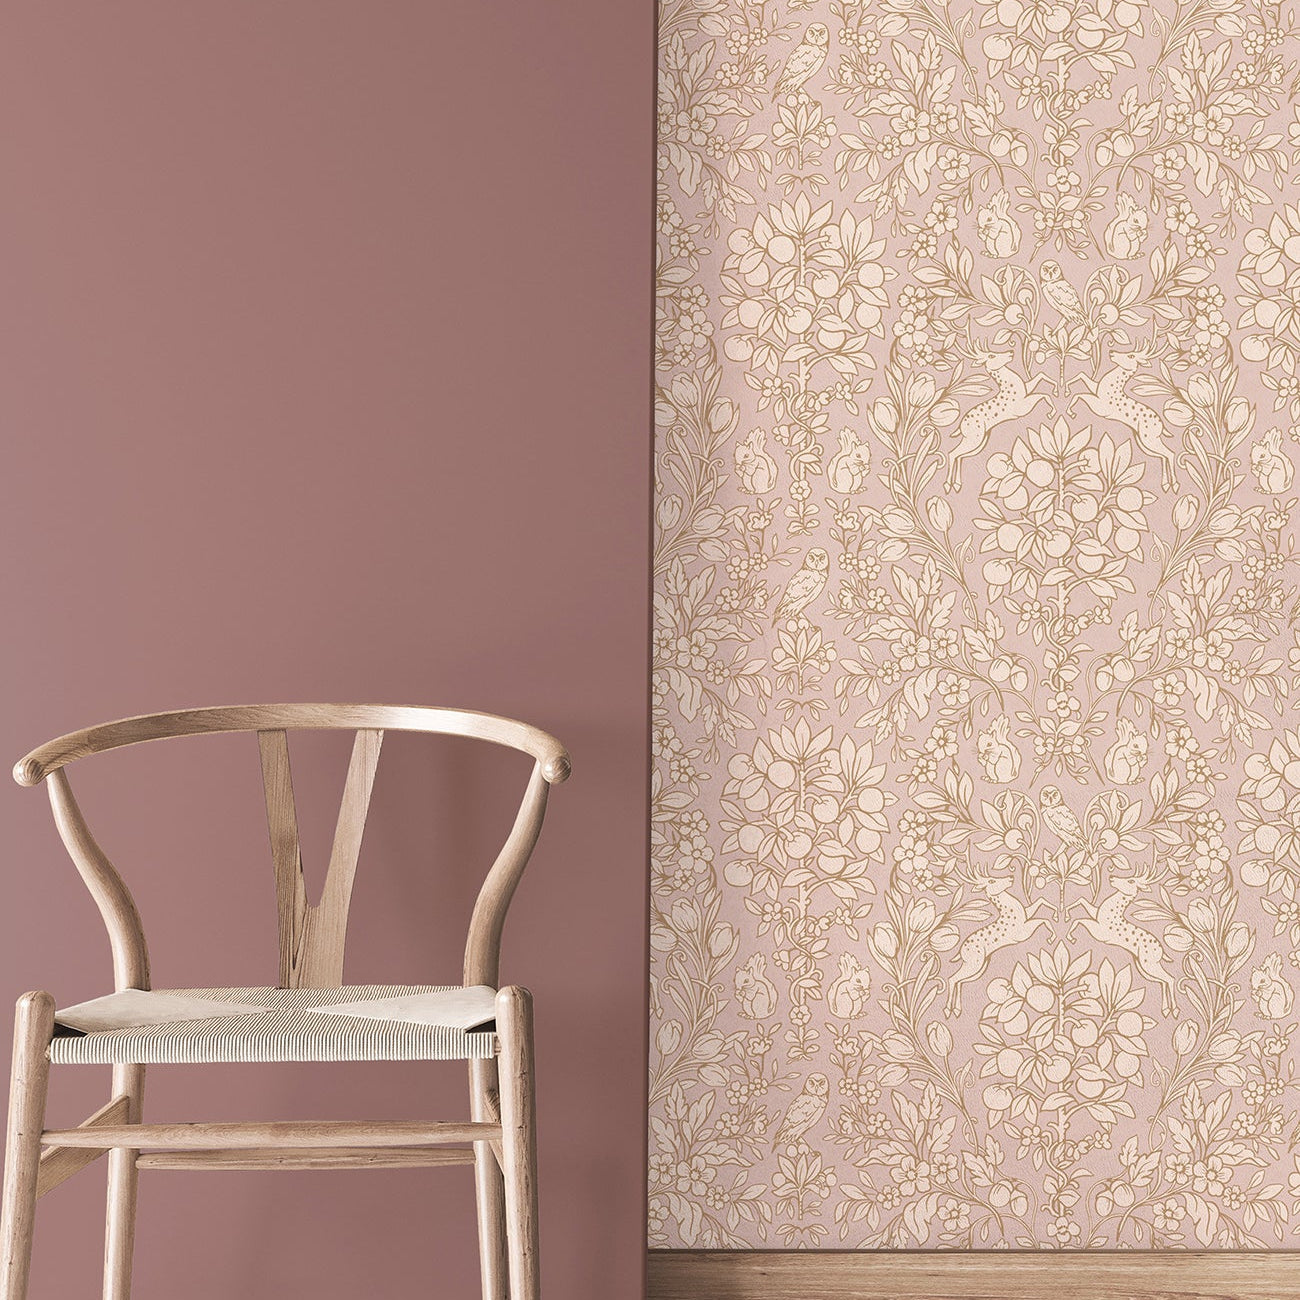 Rva Pink Fabric, Wallpaper and Home Decor